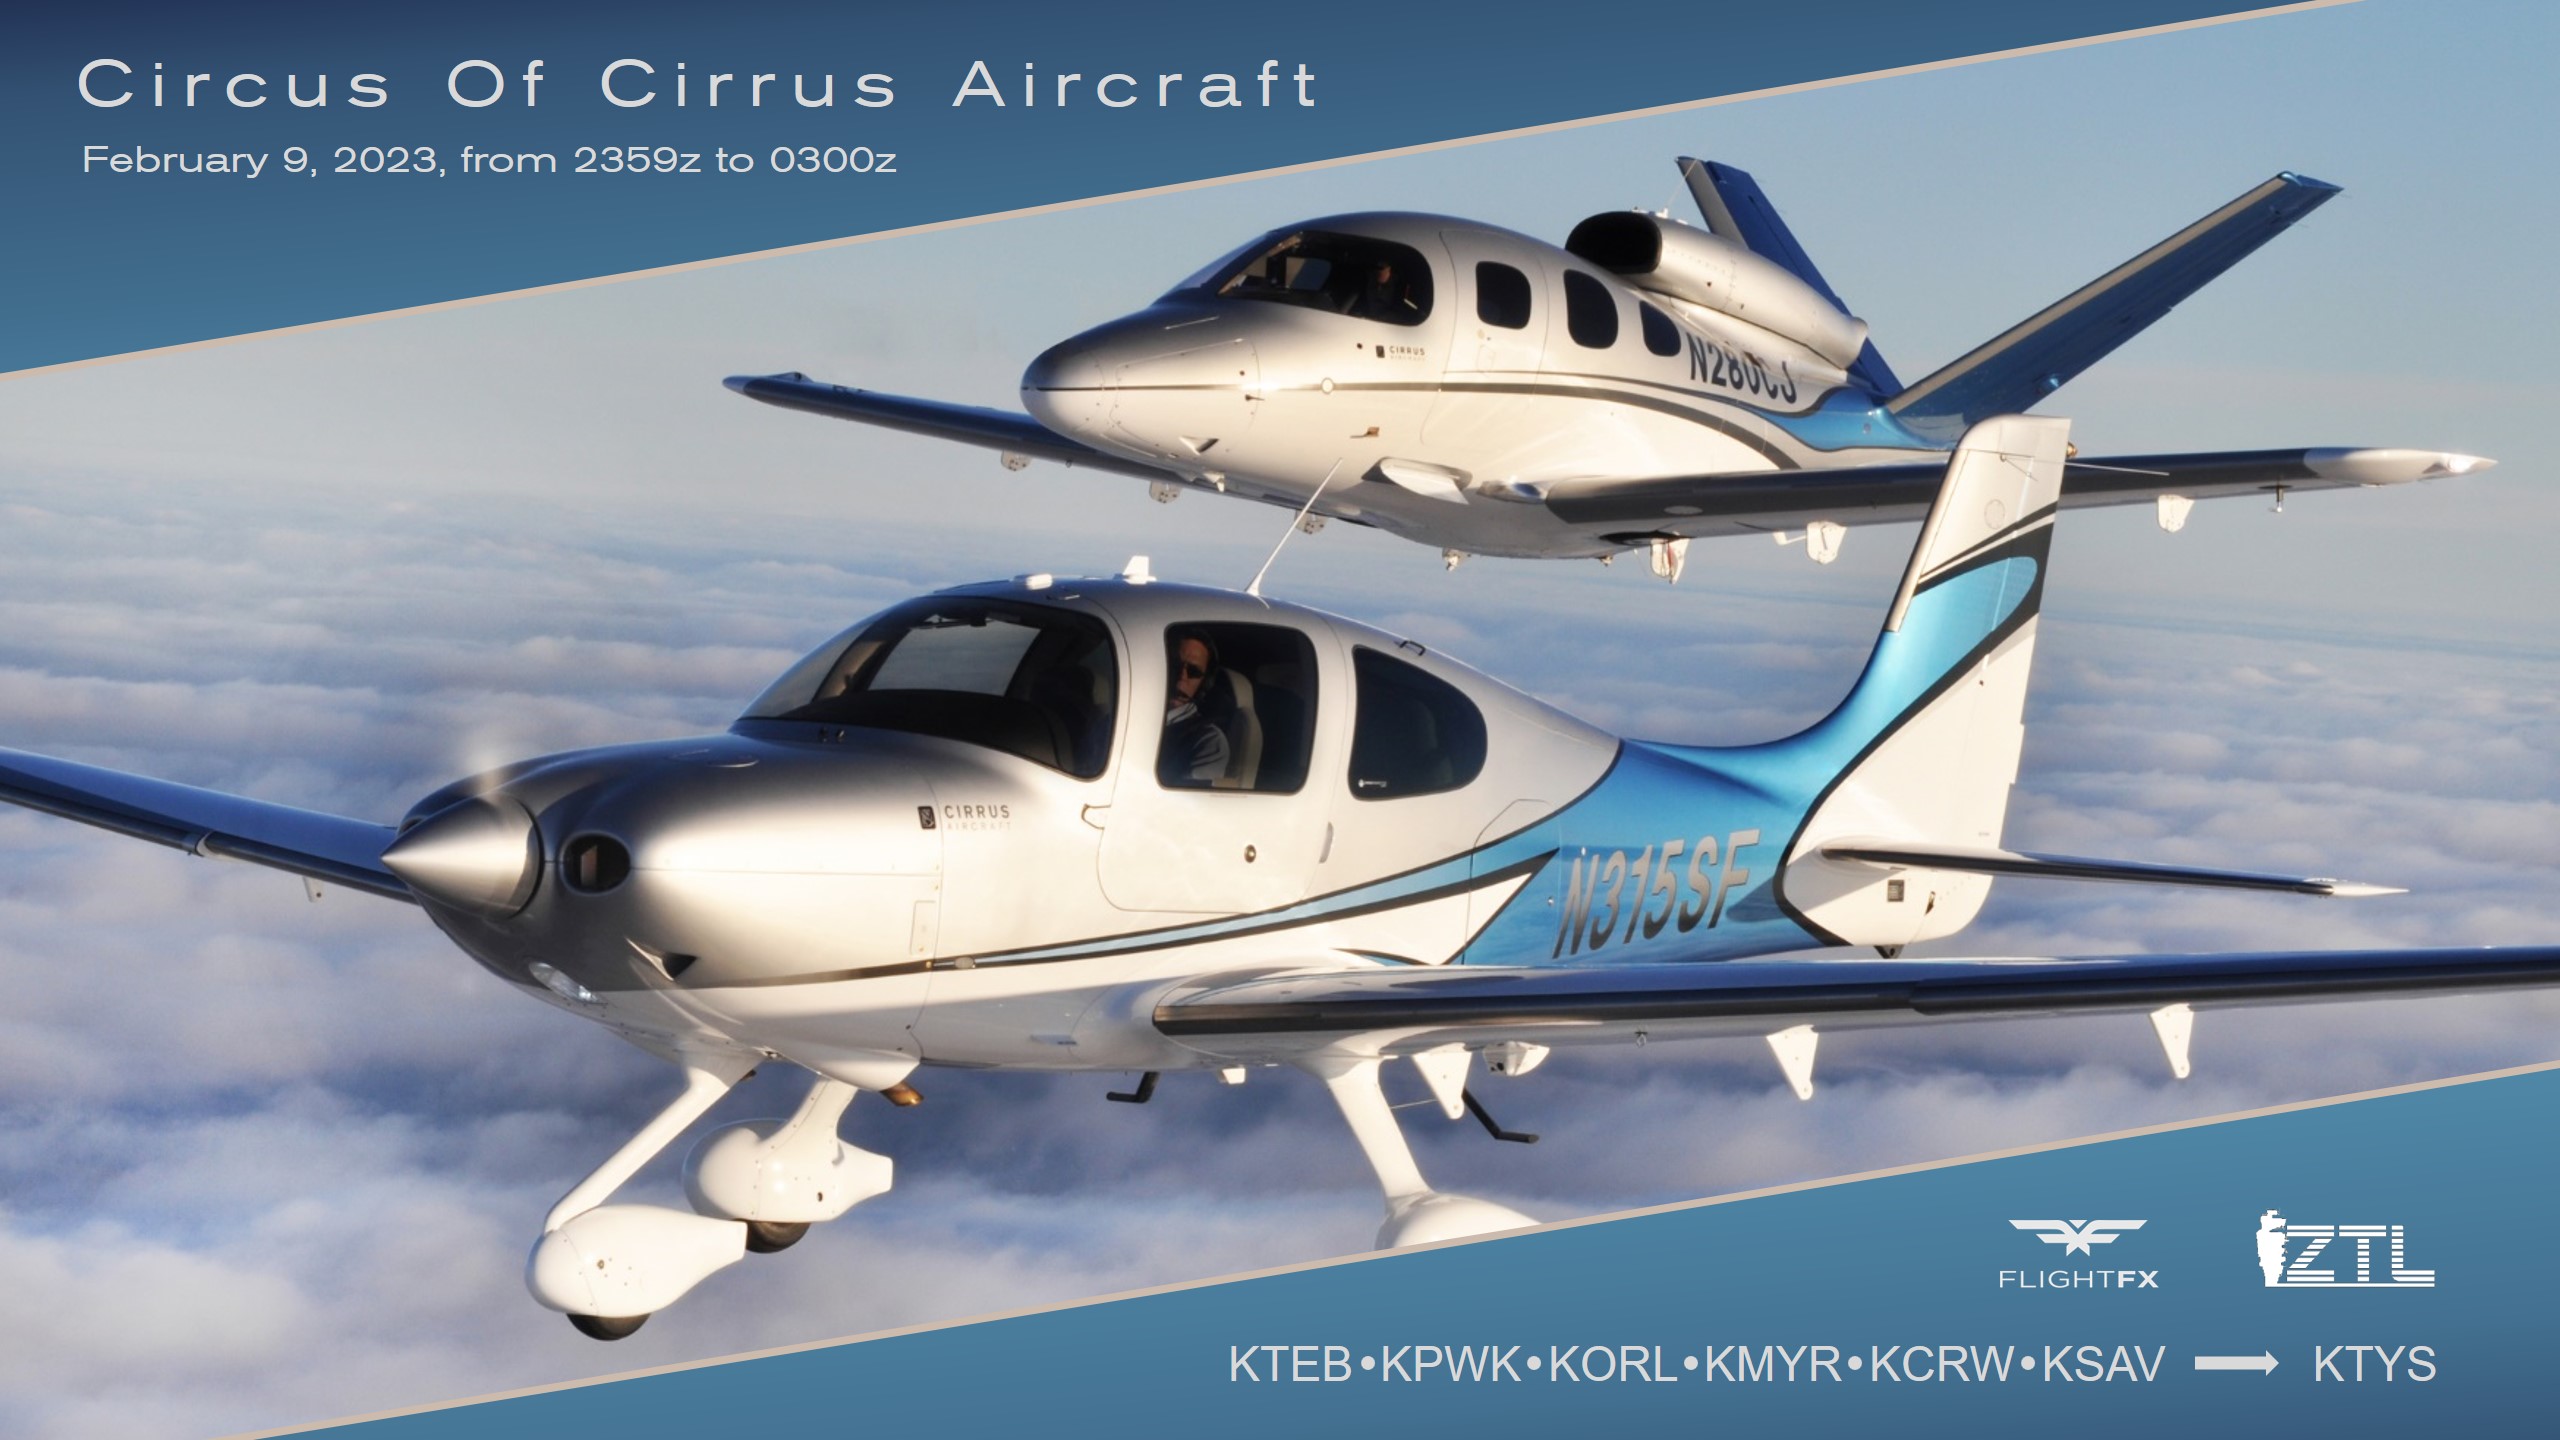 A Circus of Cirrus Aircraft